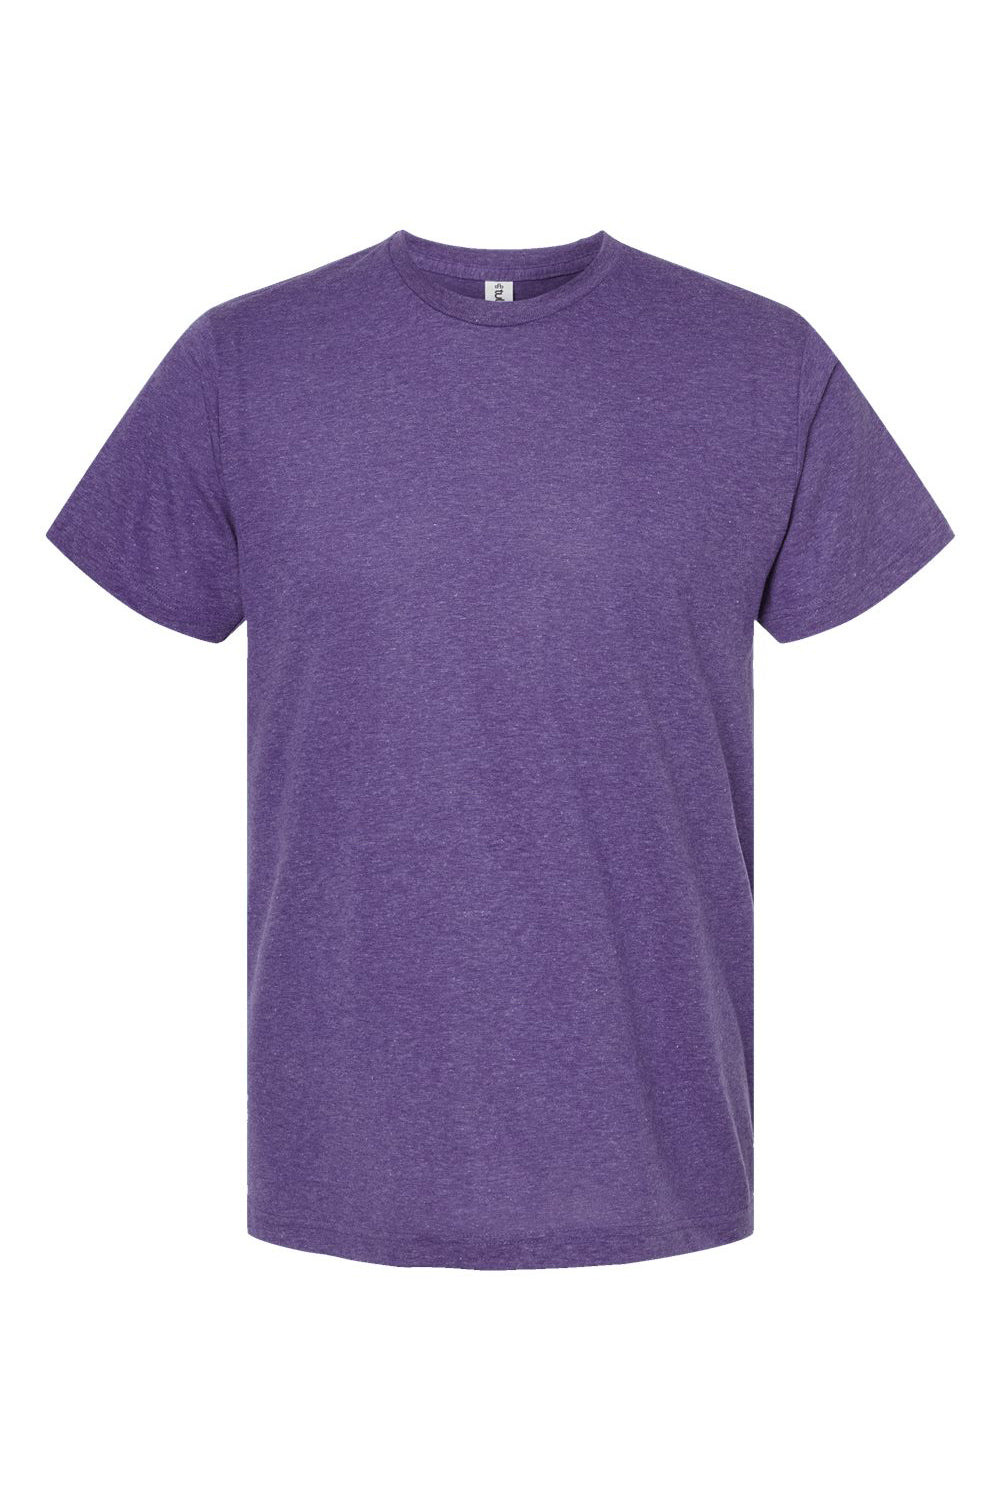 Tultex 241 Mens Poly-Rich Short Sleeve Crewneck T-Shirt Heather Purple Flat Front